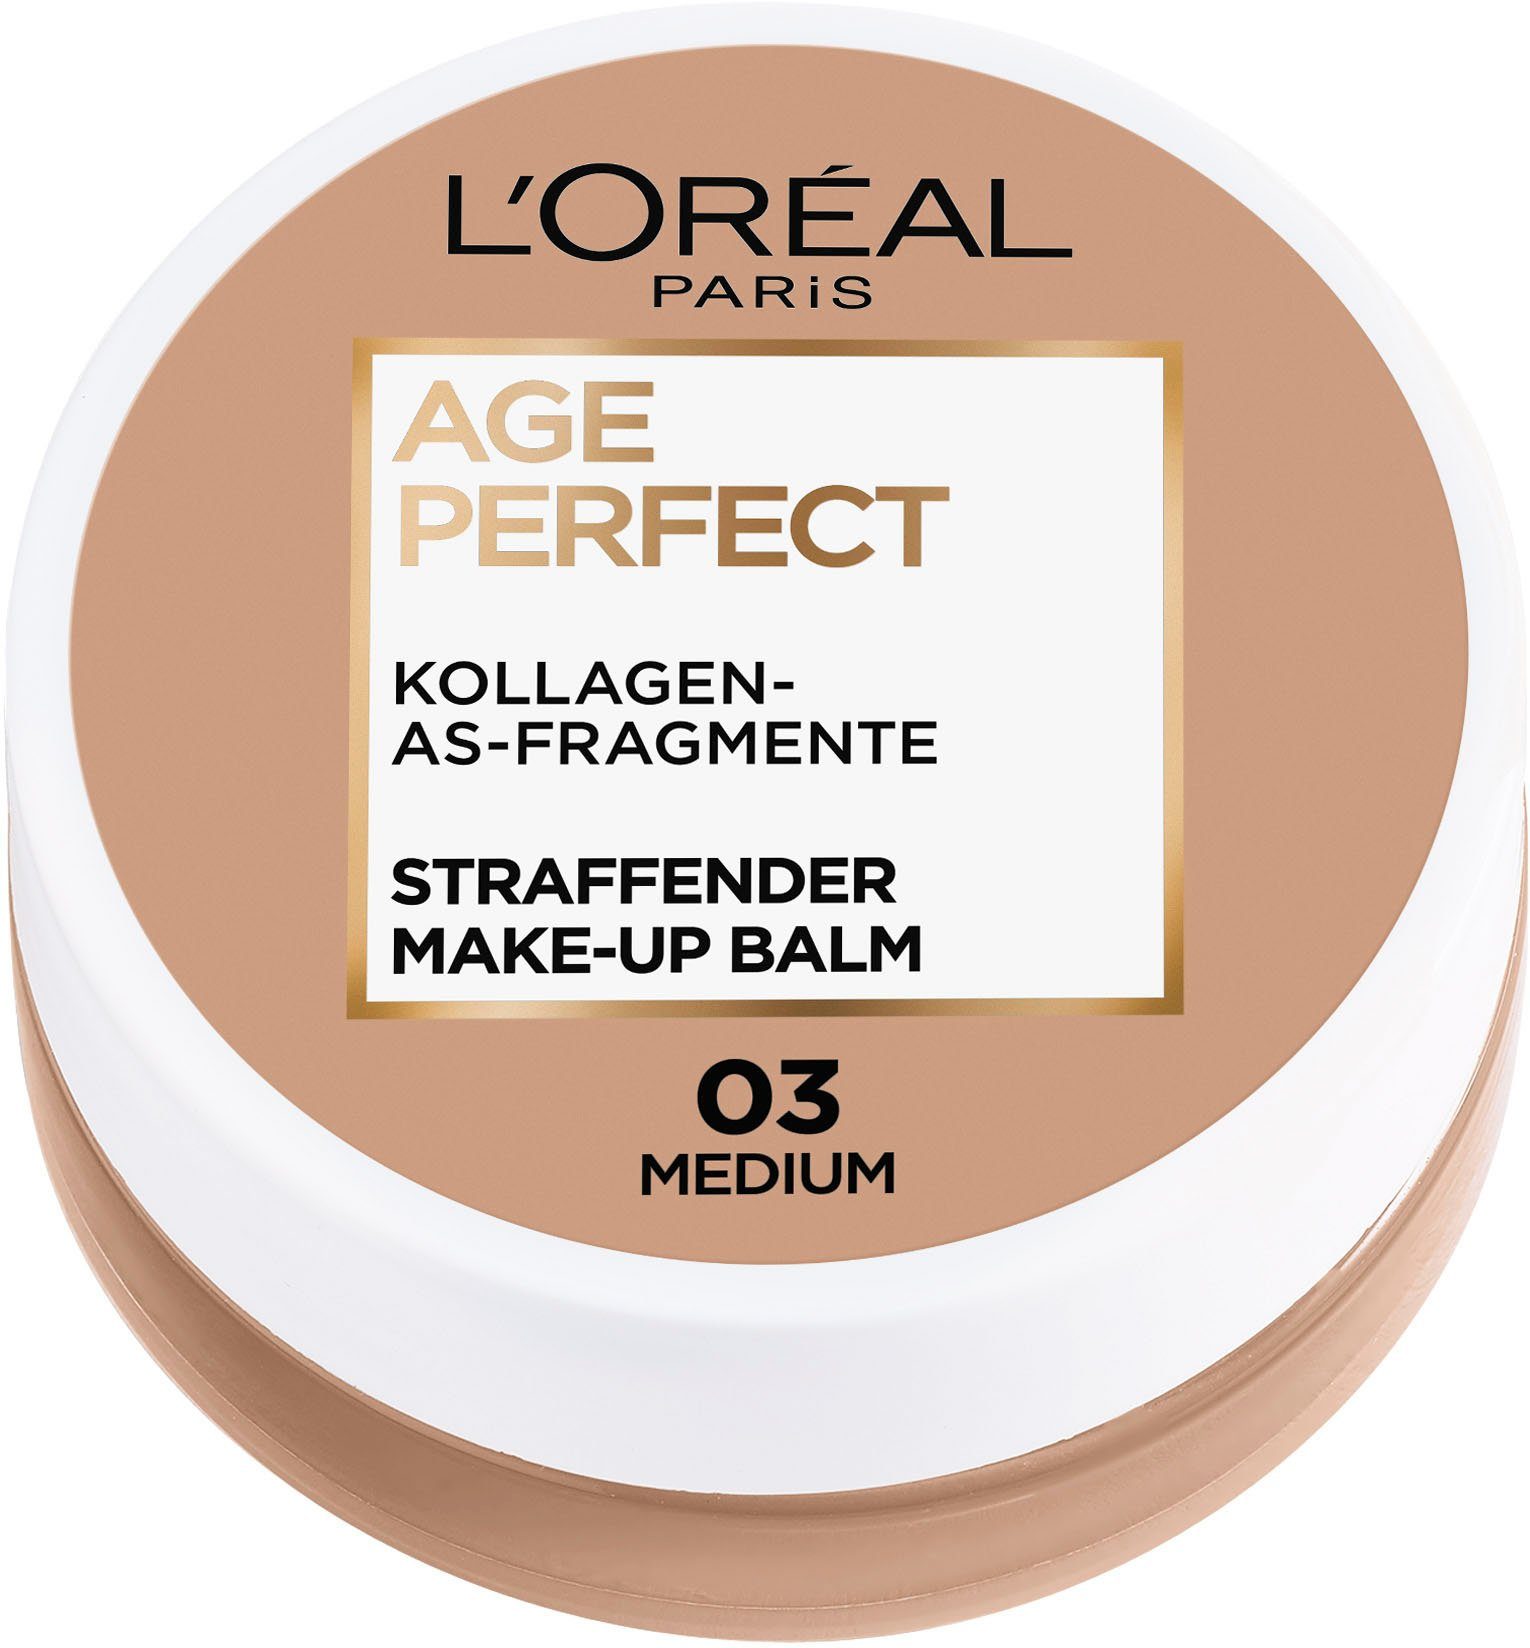 L'ORÉAL Make-up Perfect Age Medium Age Balm Balm, 03 PARIS Foundation Make-up Perfect